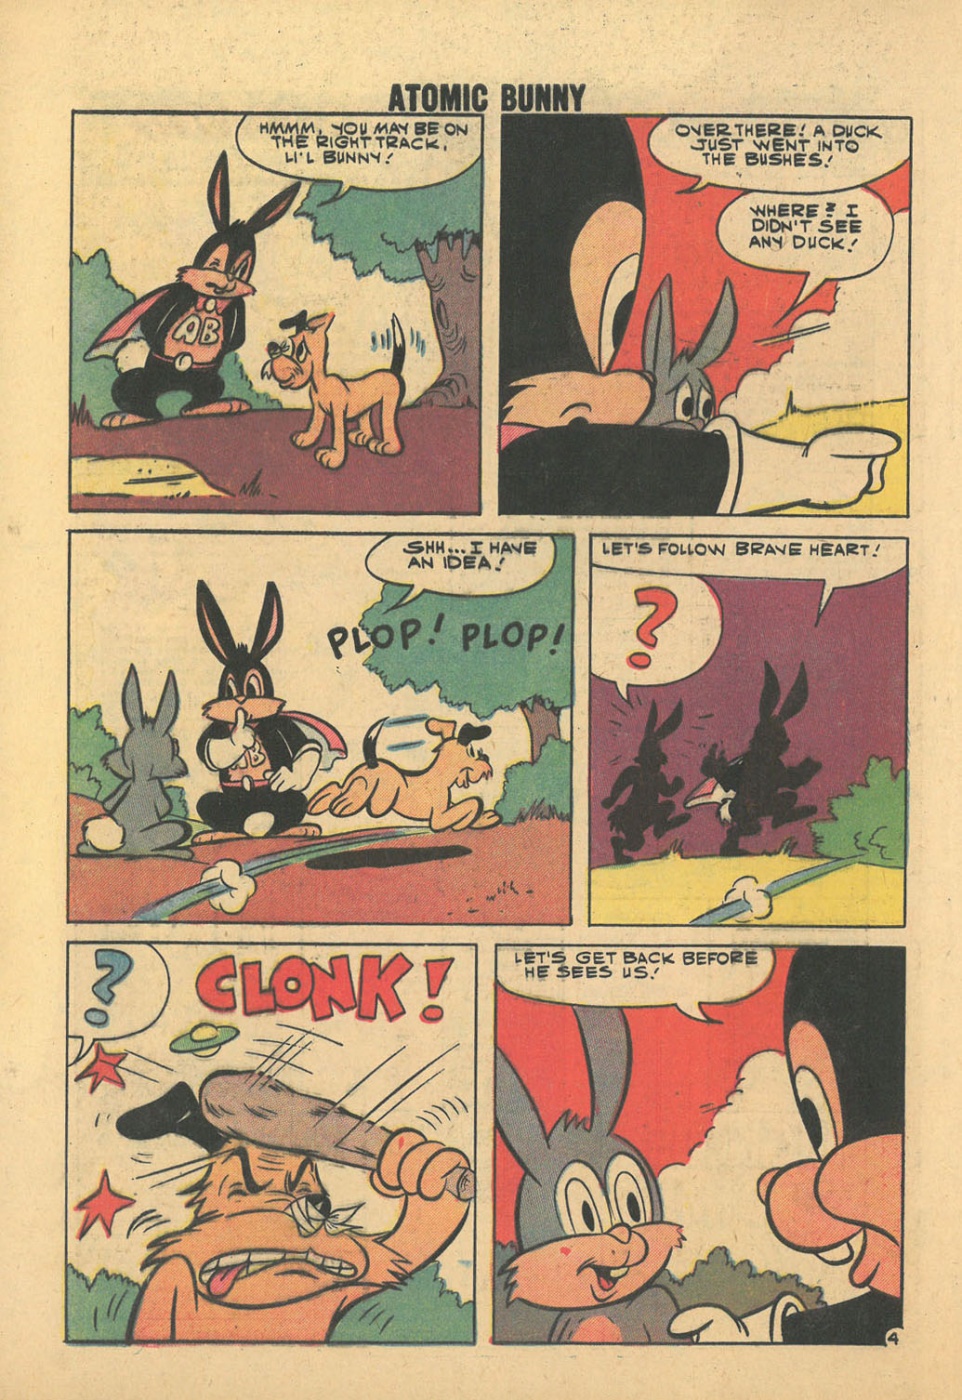 Atomic-Bunny-Comic-Strips (b) (31)